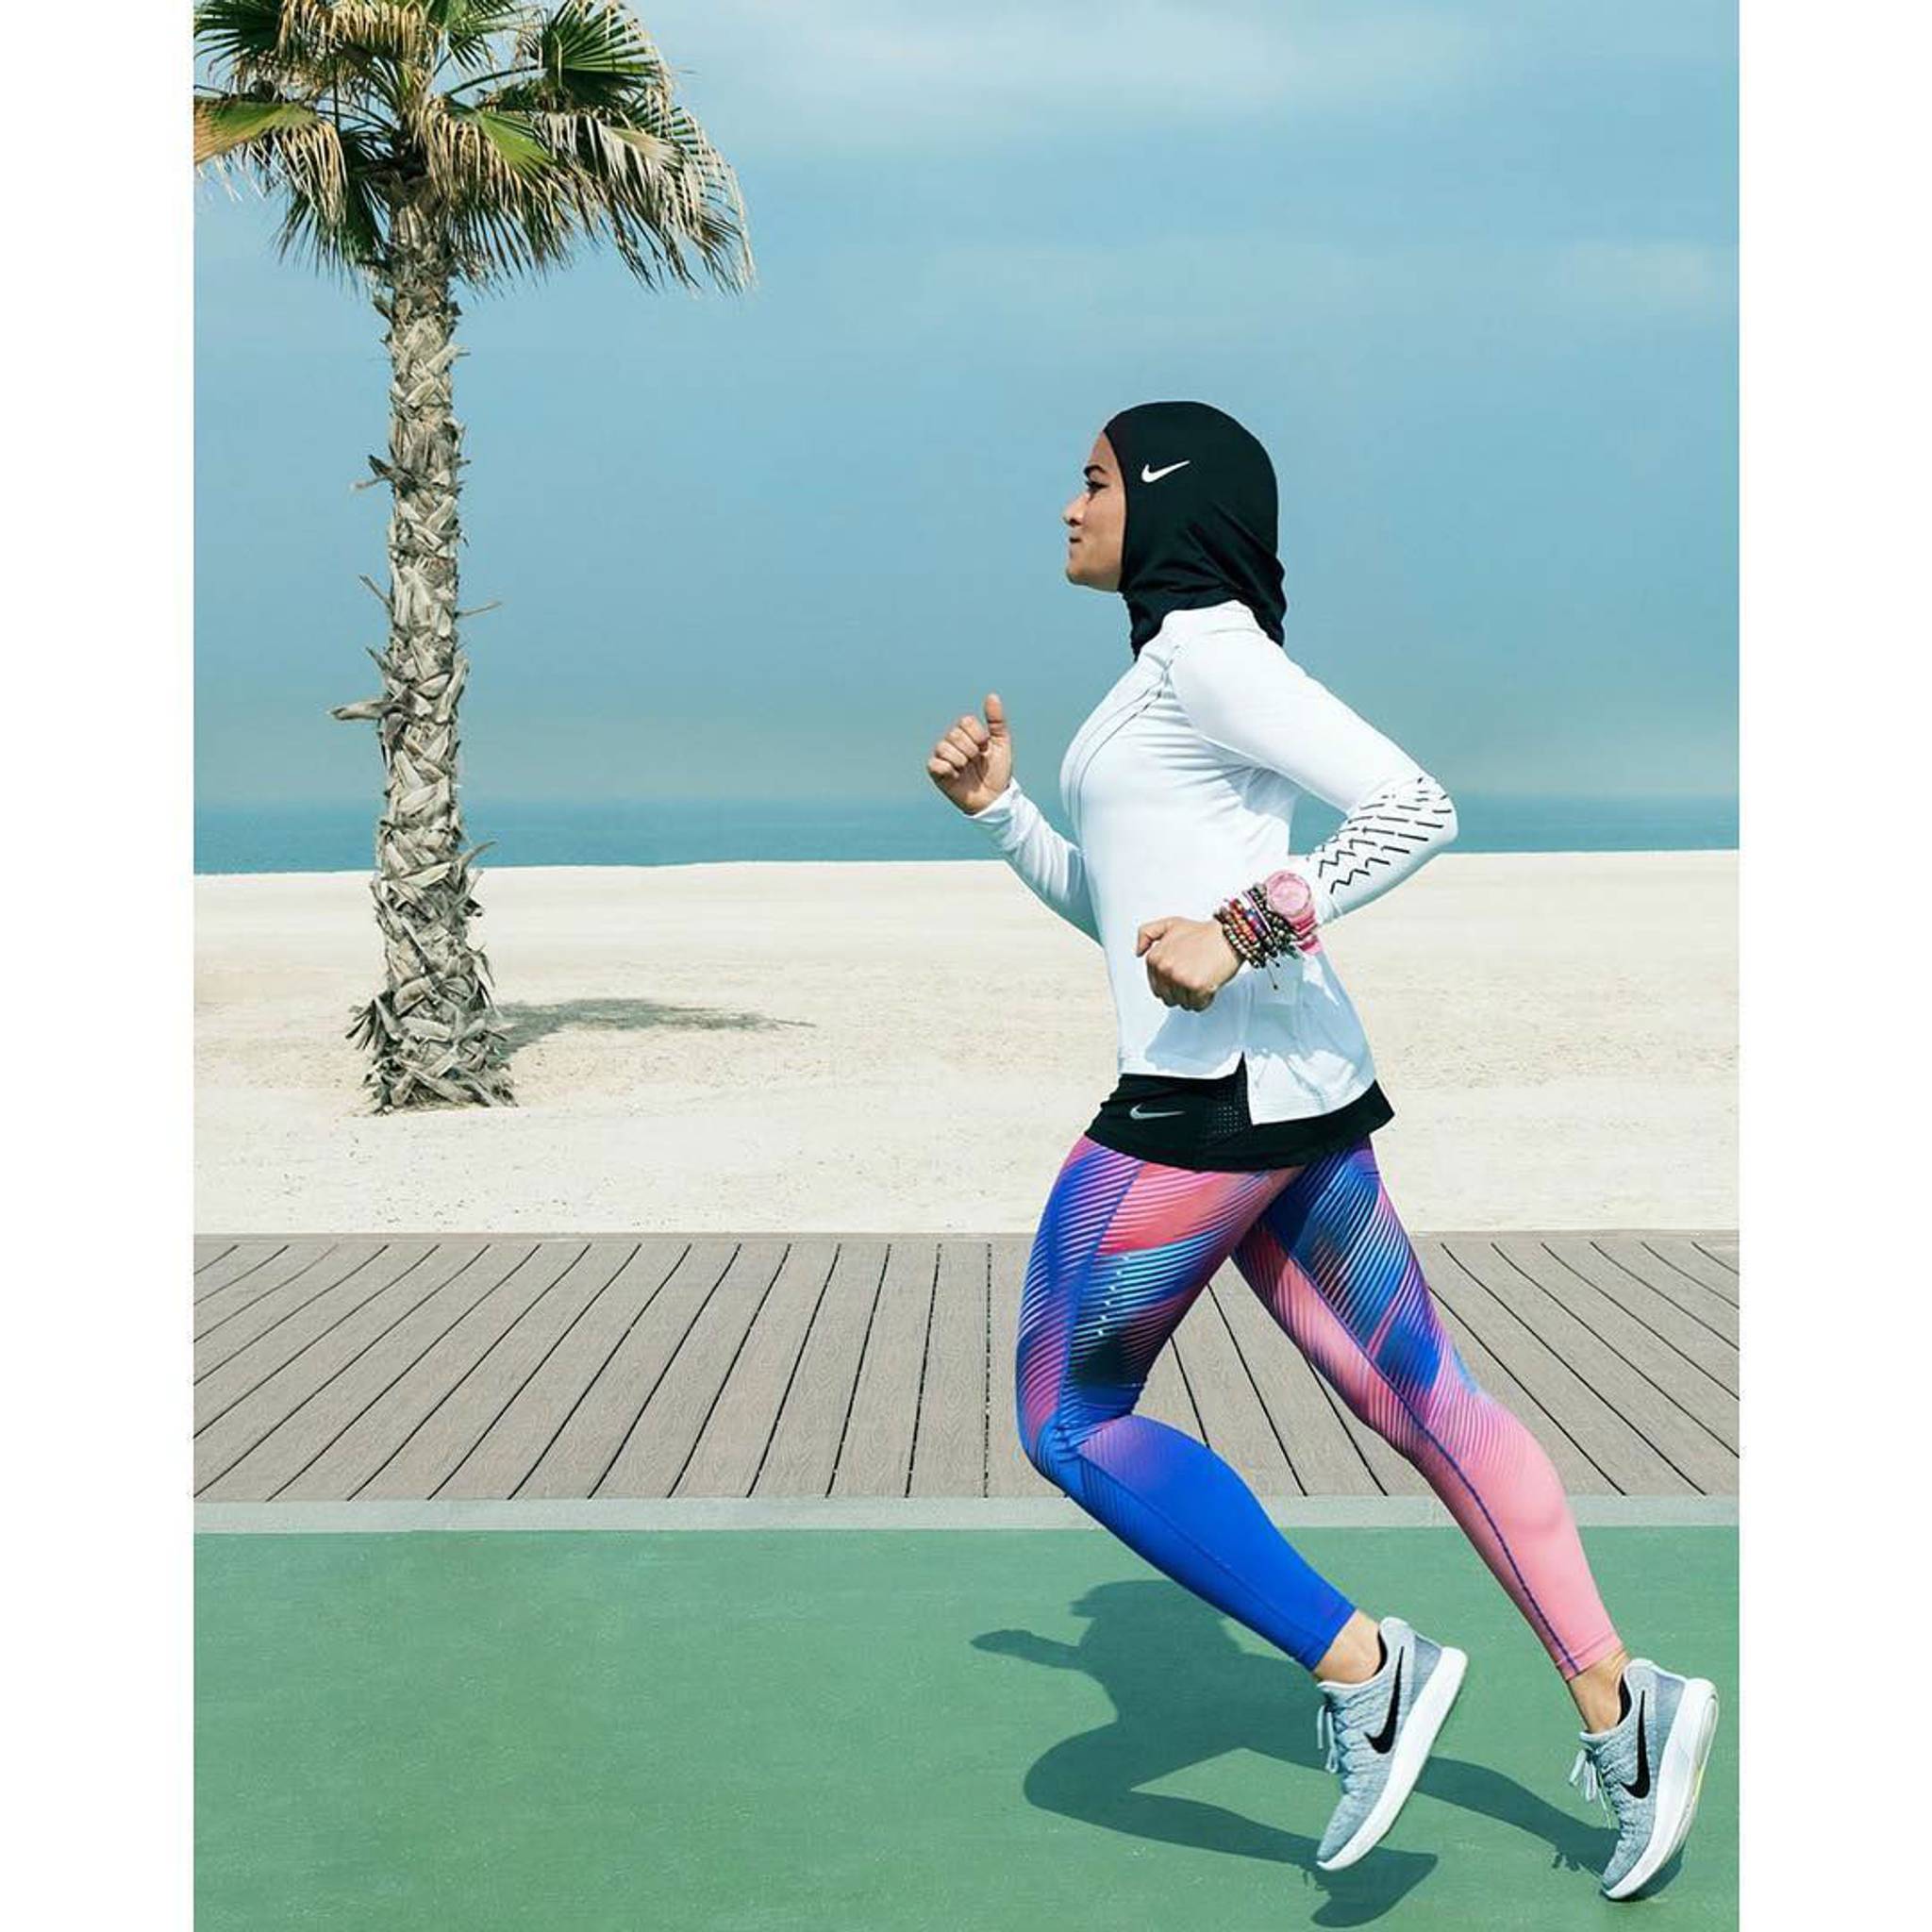 Nike designs hijabs for Muslim athletes